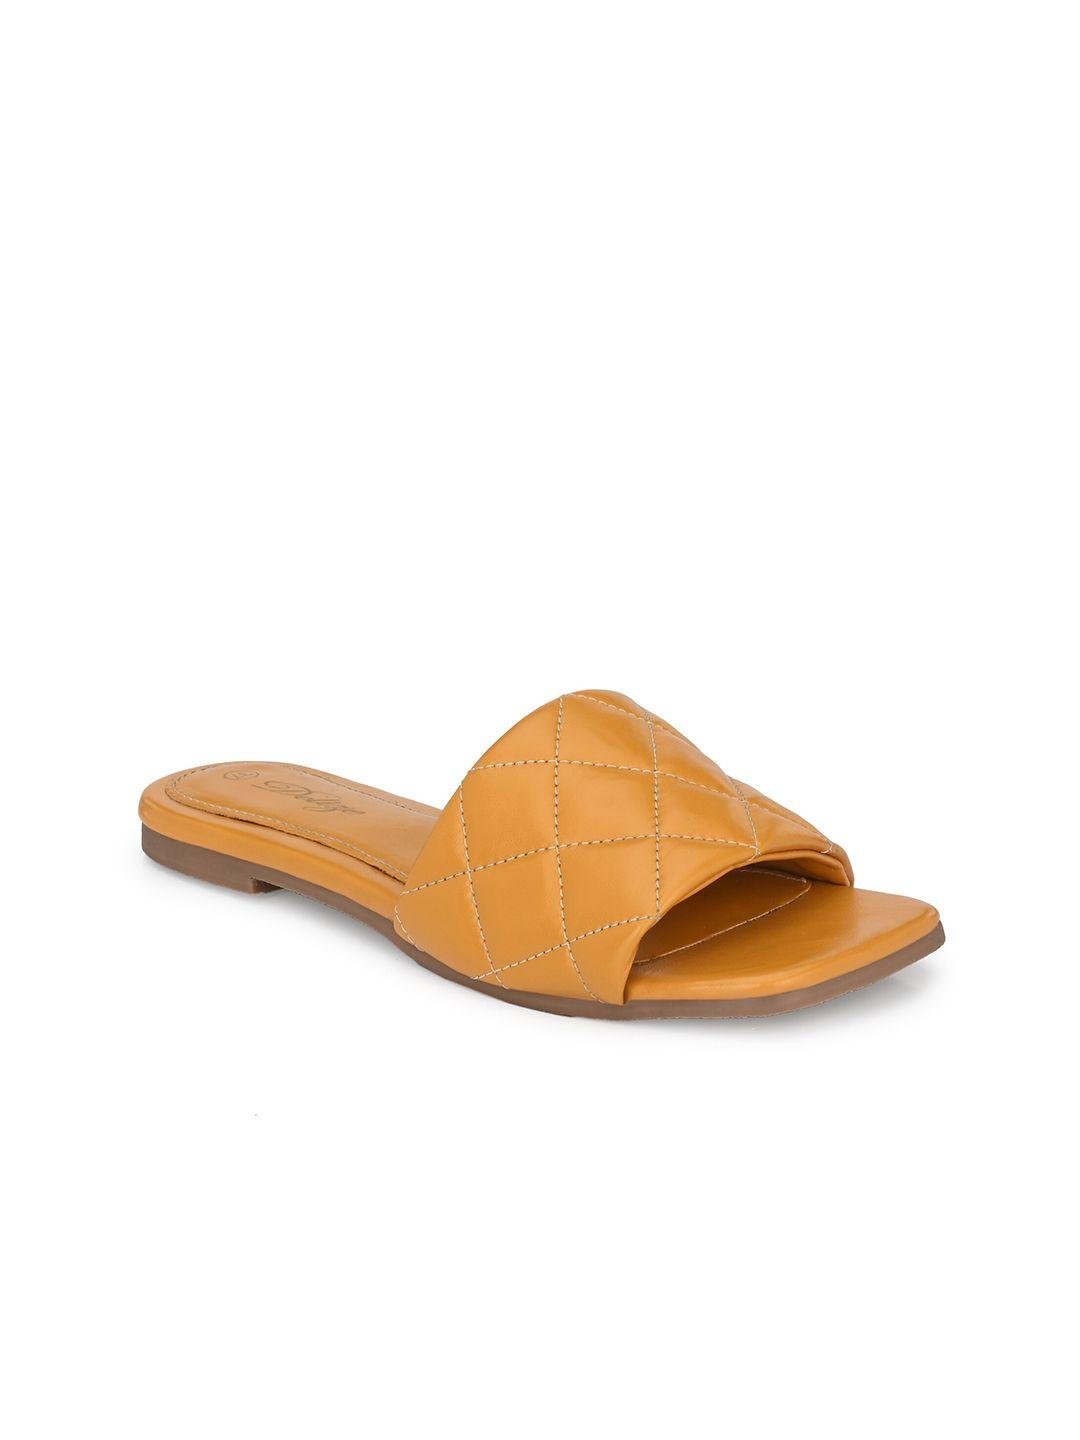 delize-women-yellow-flats-sandals